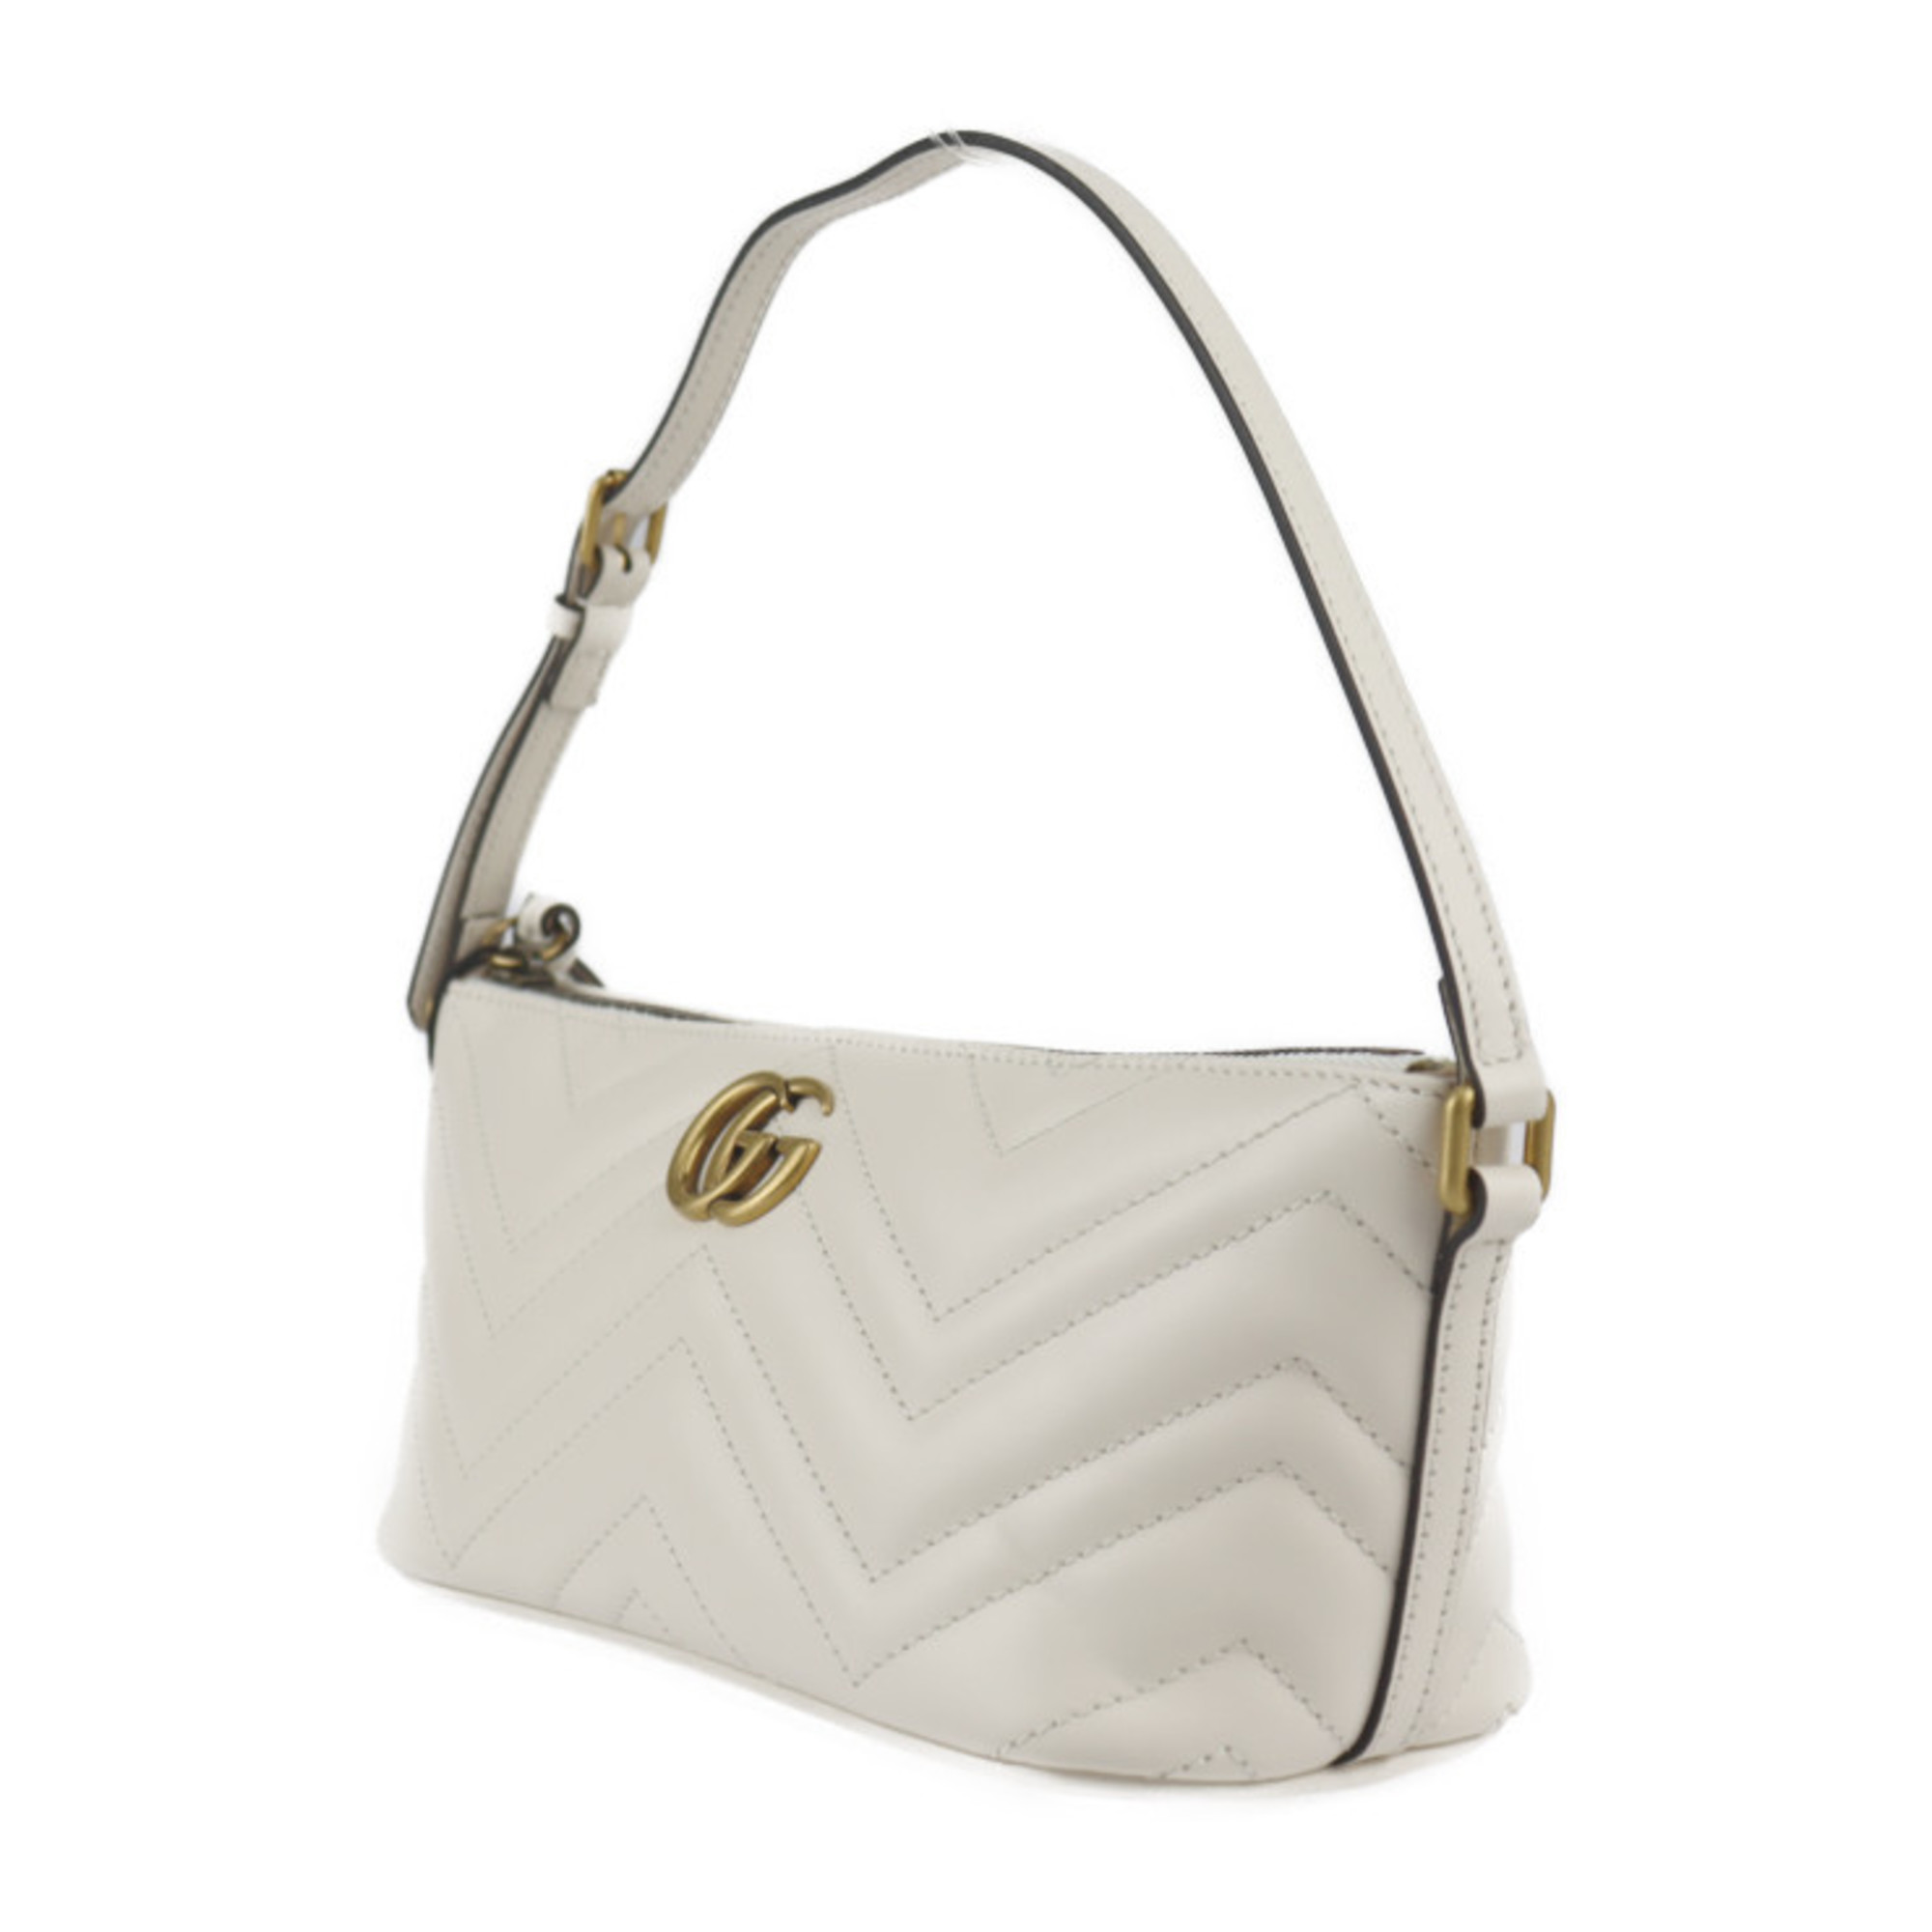 GUCCI Gucci GG Marmont Shoulder Bag 739166 White Ivory Gold Hardware Quilted Handbag